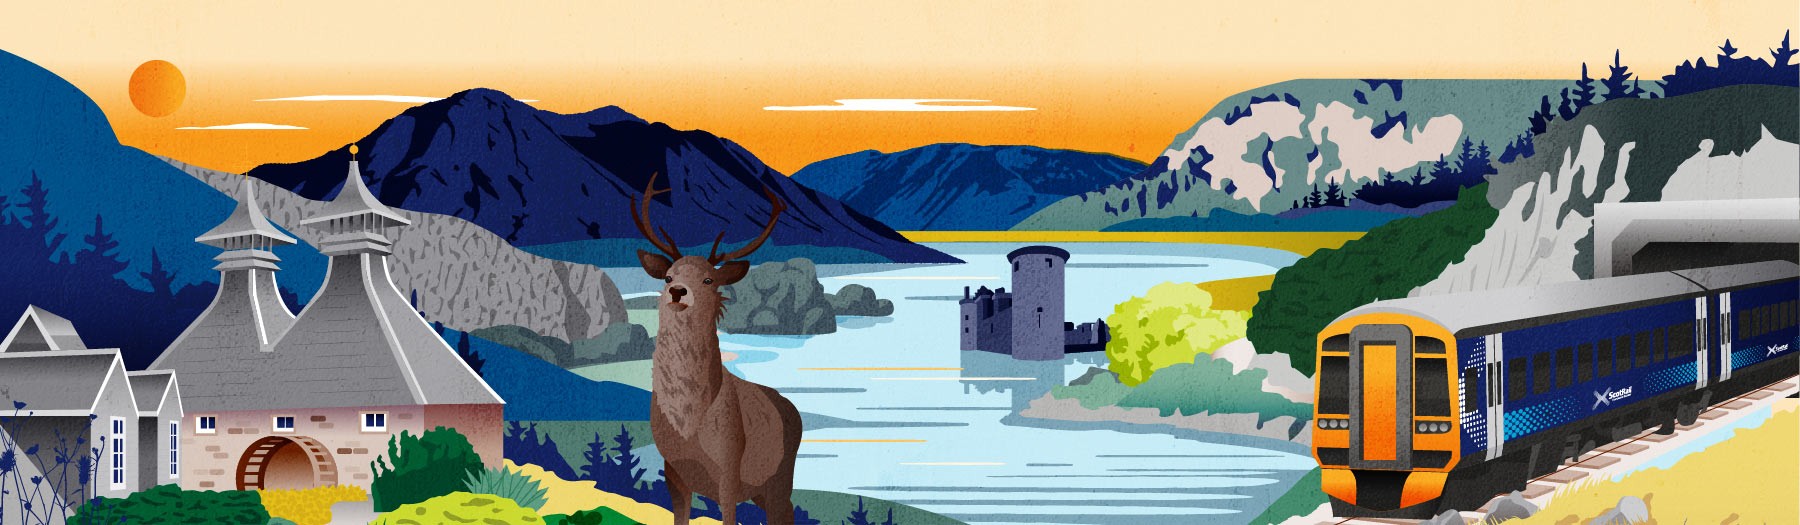 Spirit of Scotland illustration